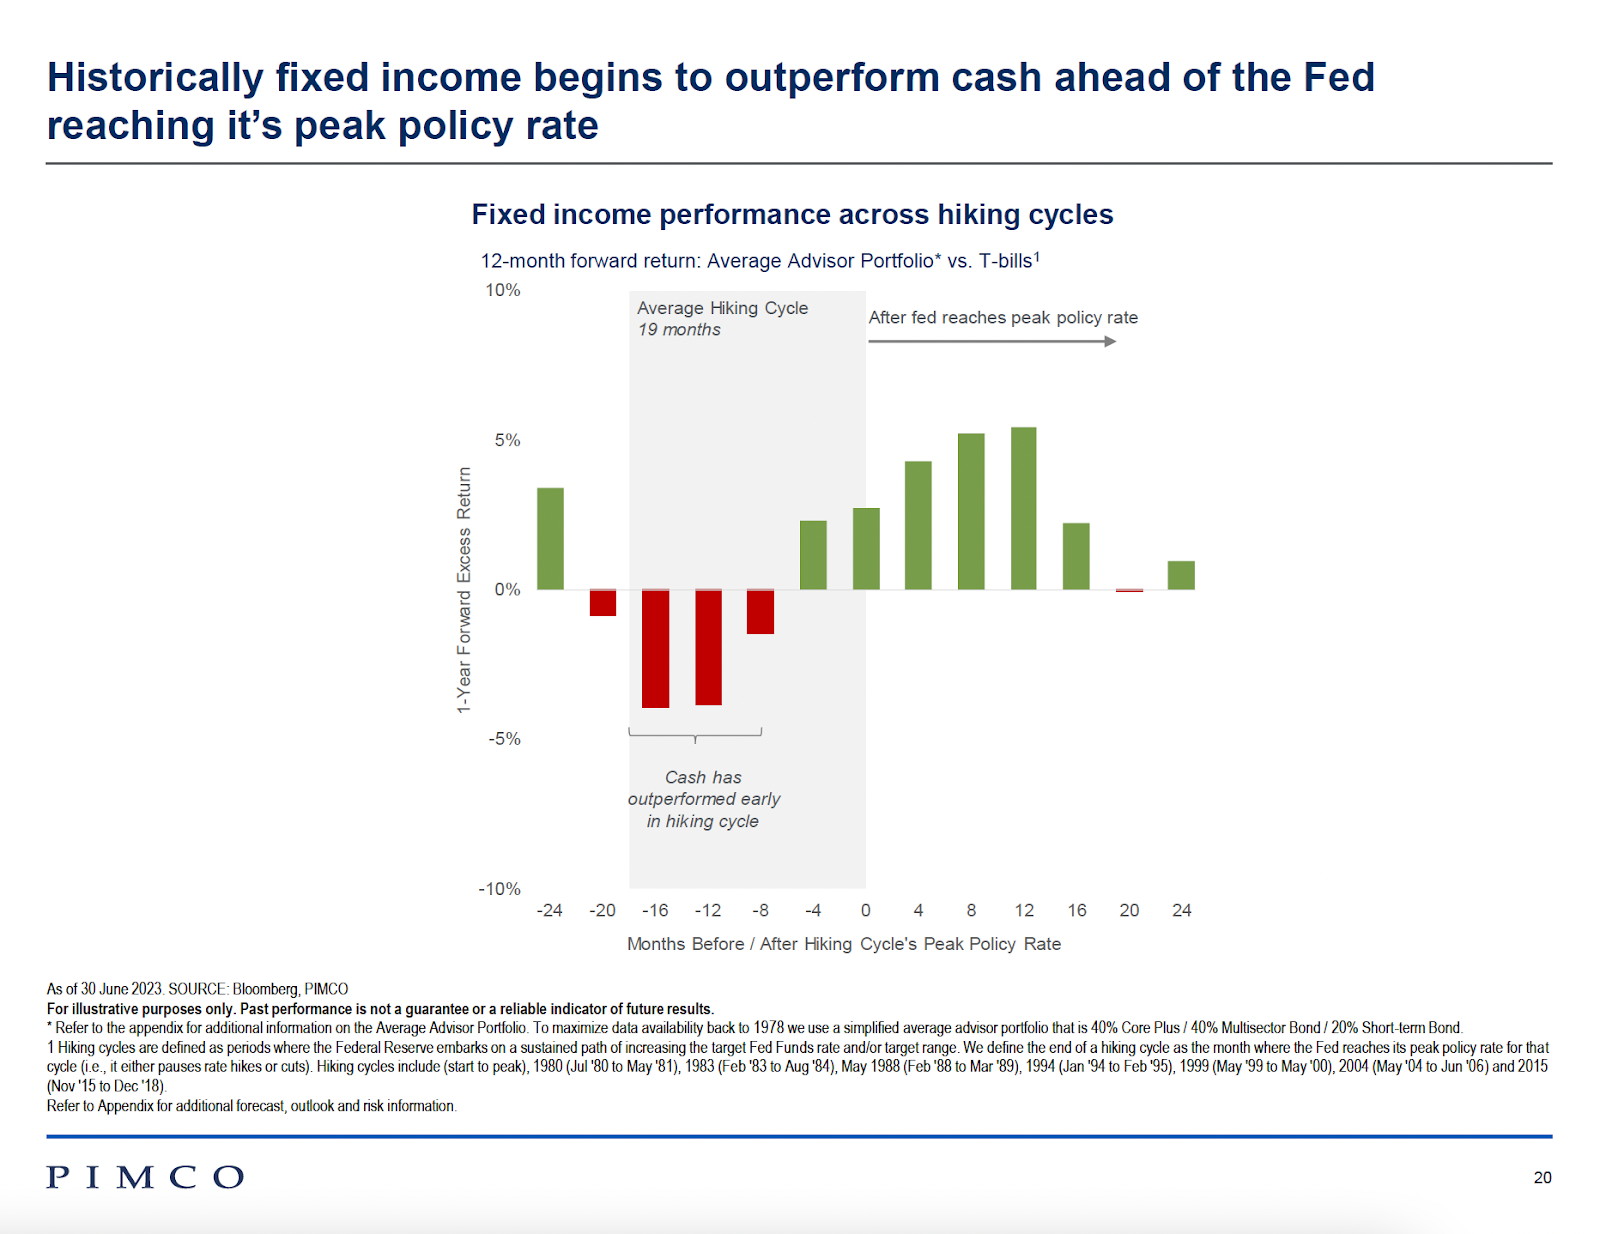 bonds outperform cash after the peak in interest rates 